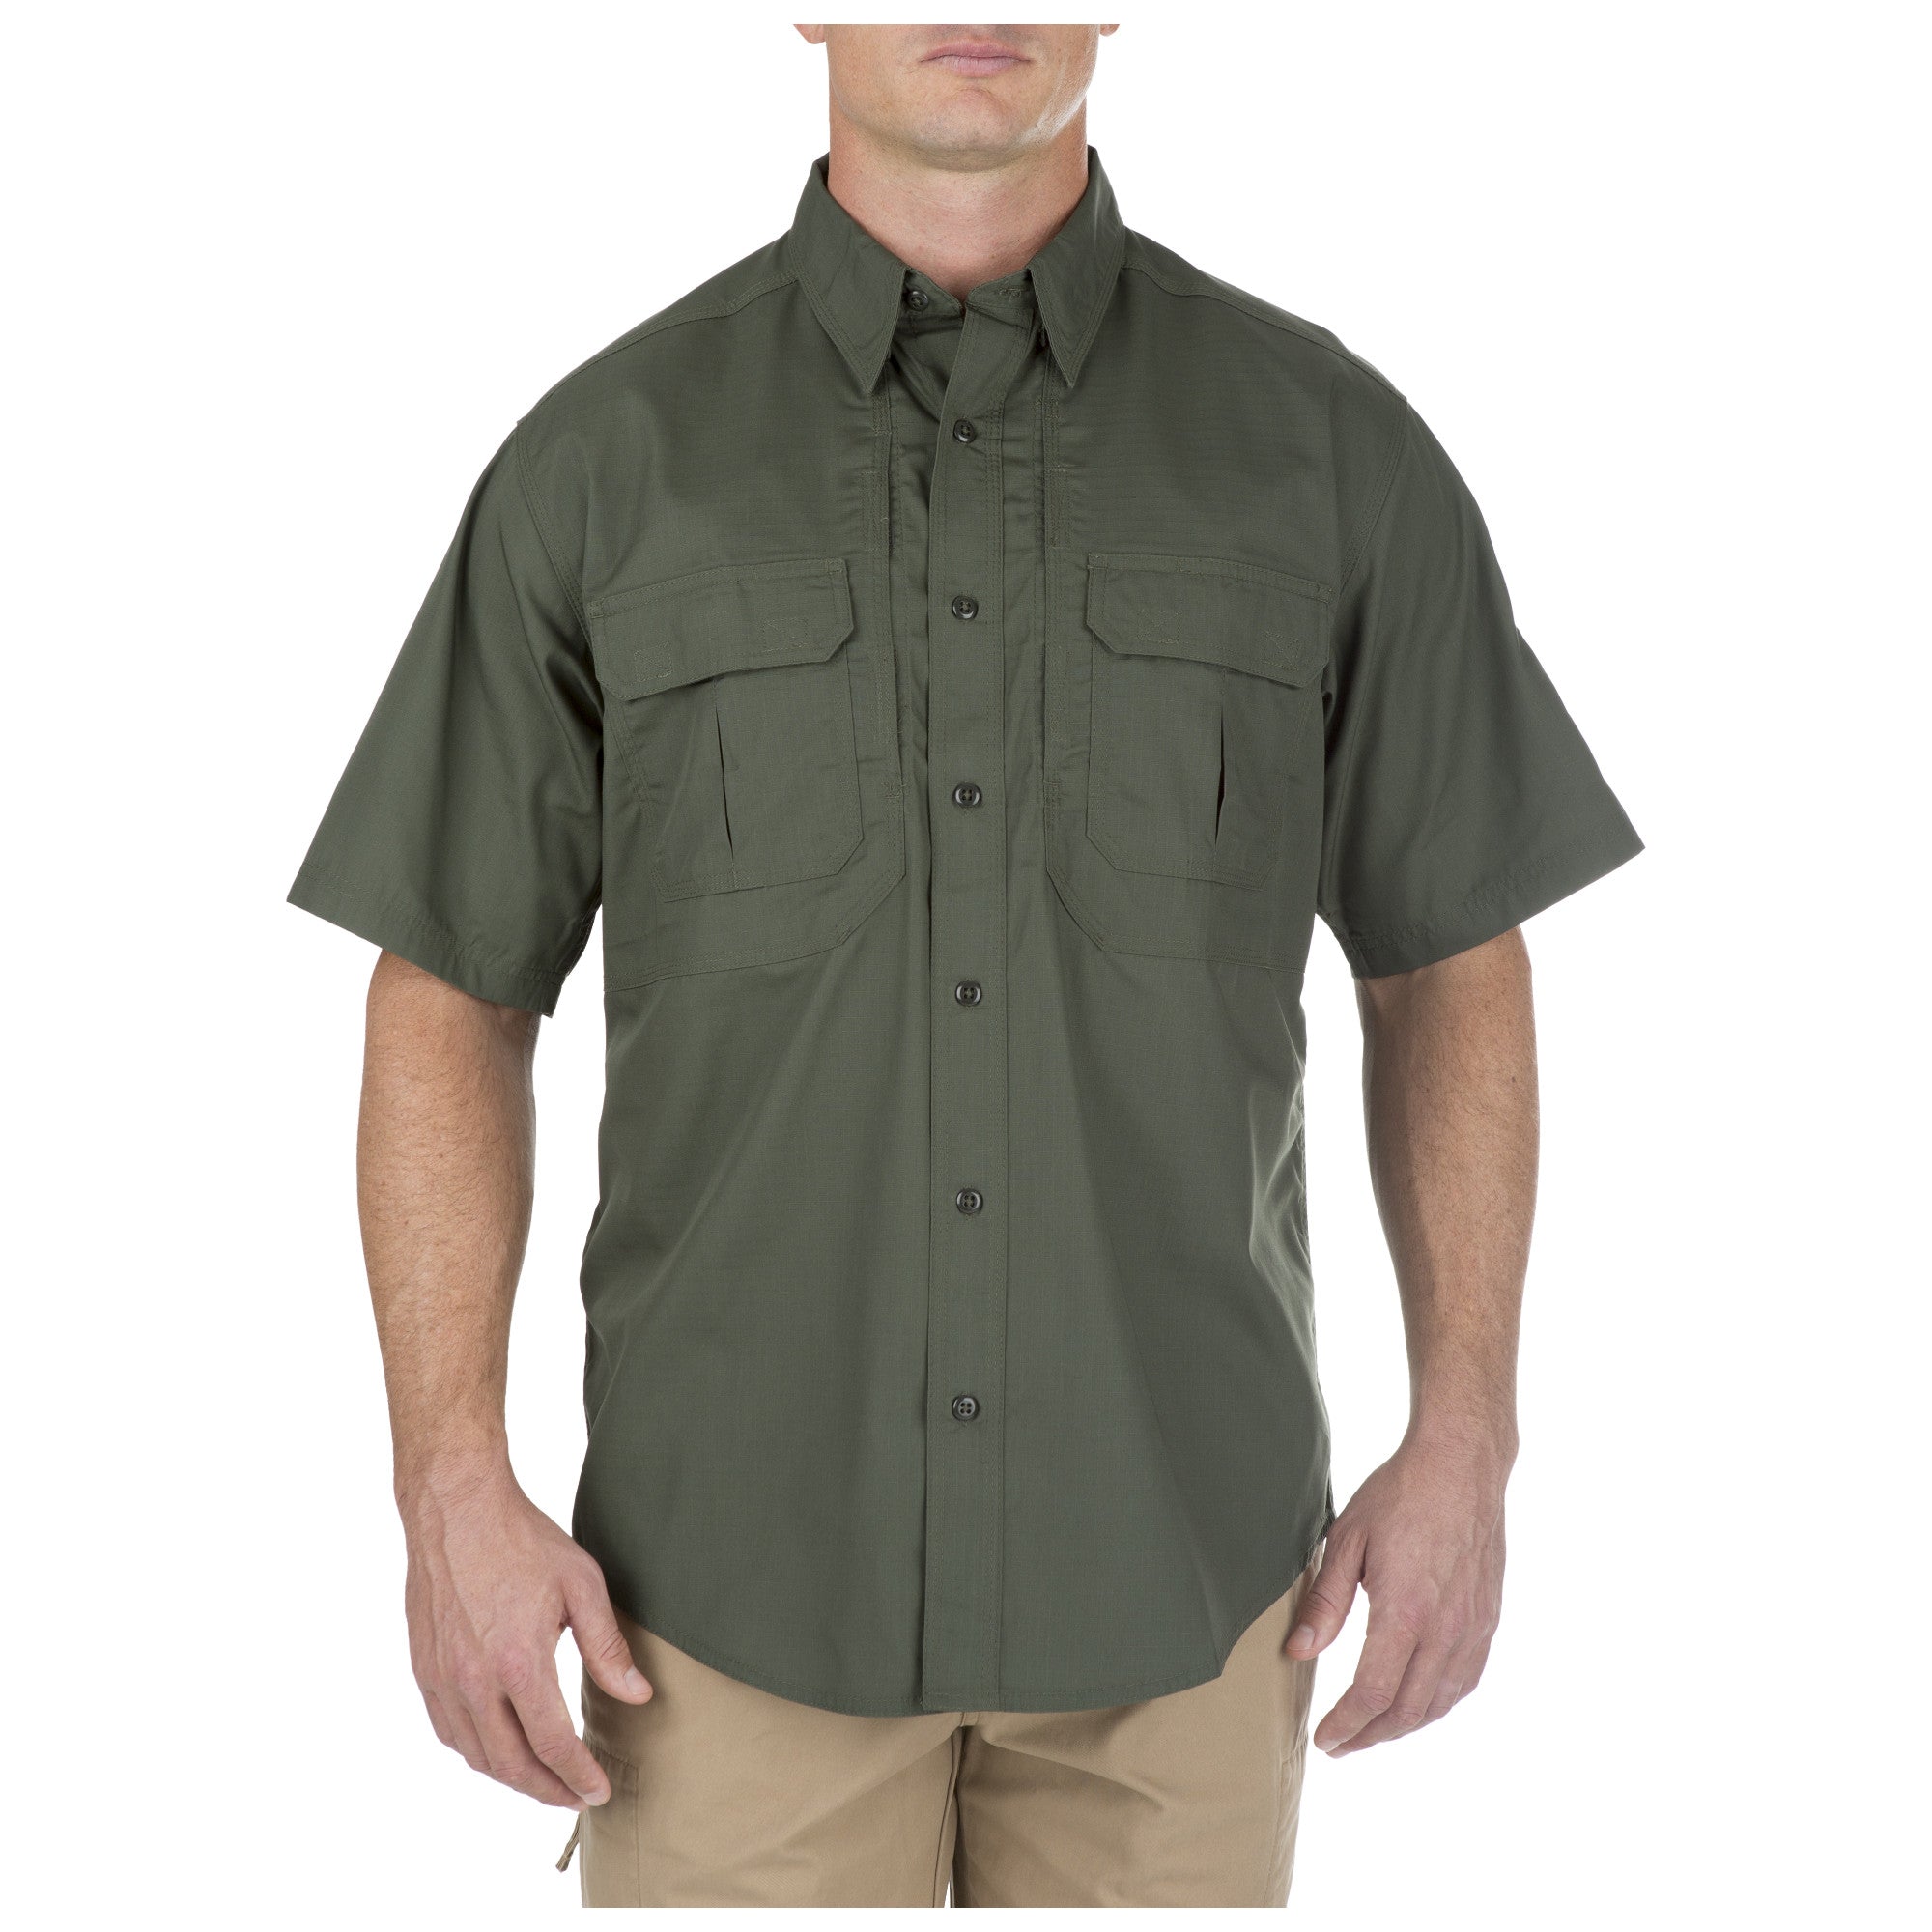 5.11 Tactical Taclite Pro Short Sleeve Shirt Tactical Gear Australia Supplier Distributor Dealer